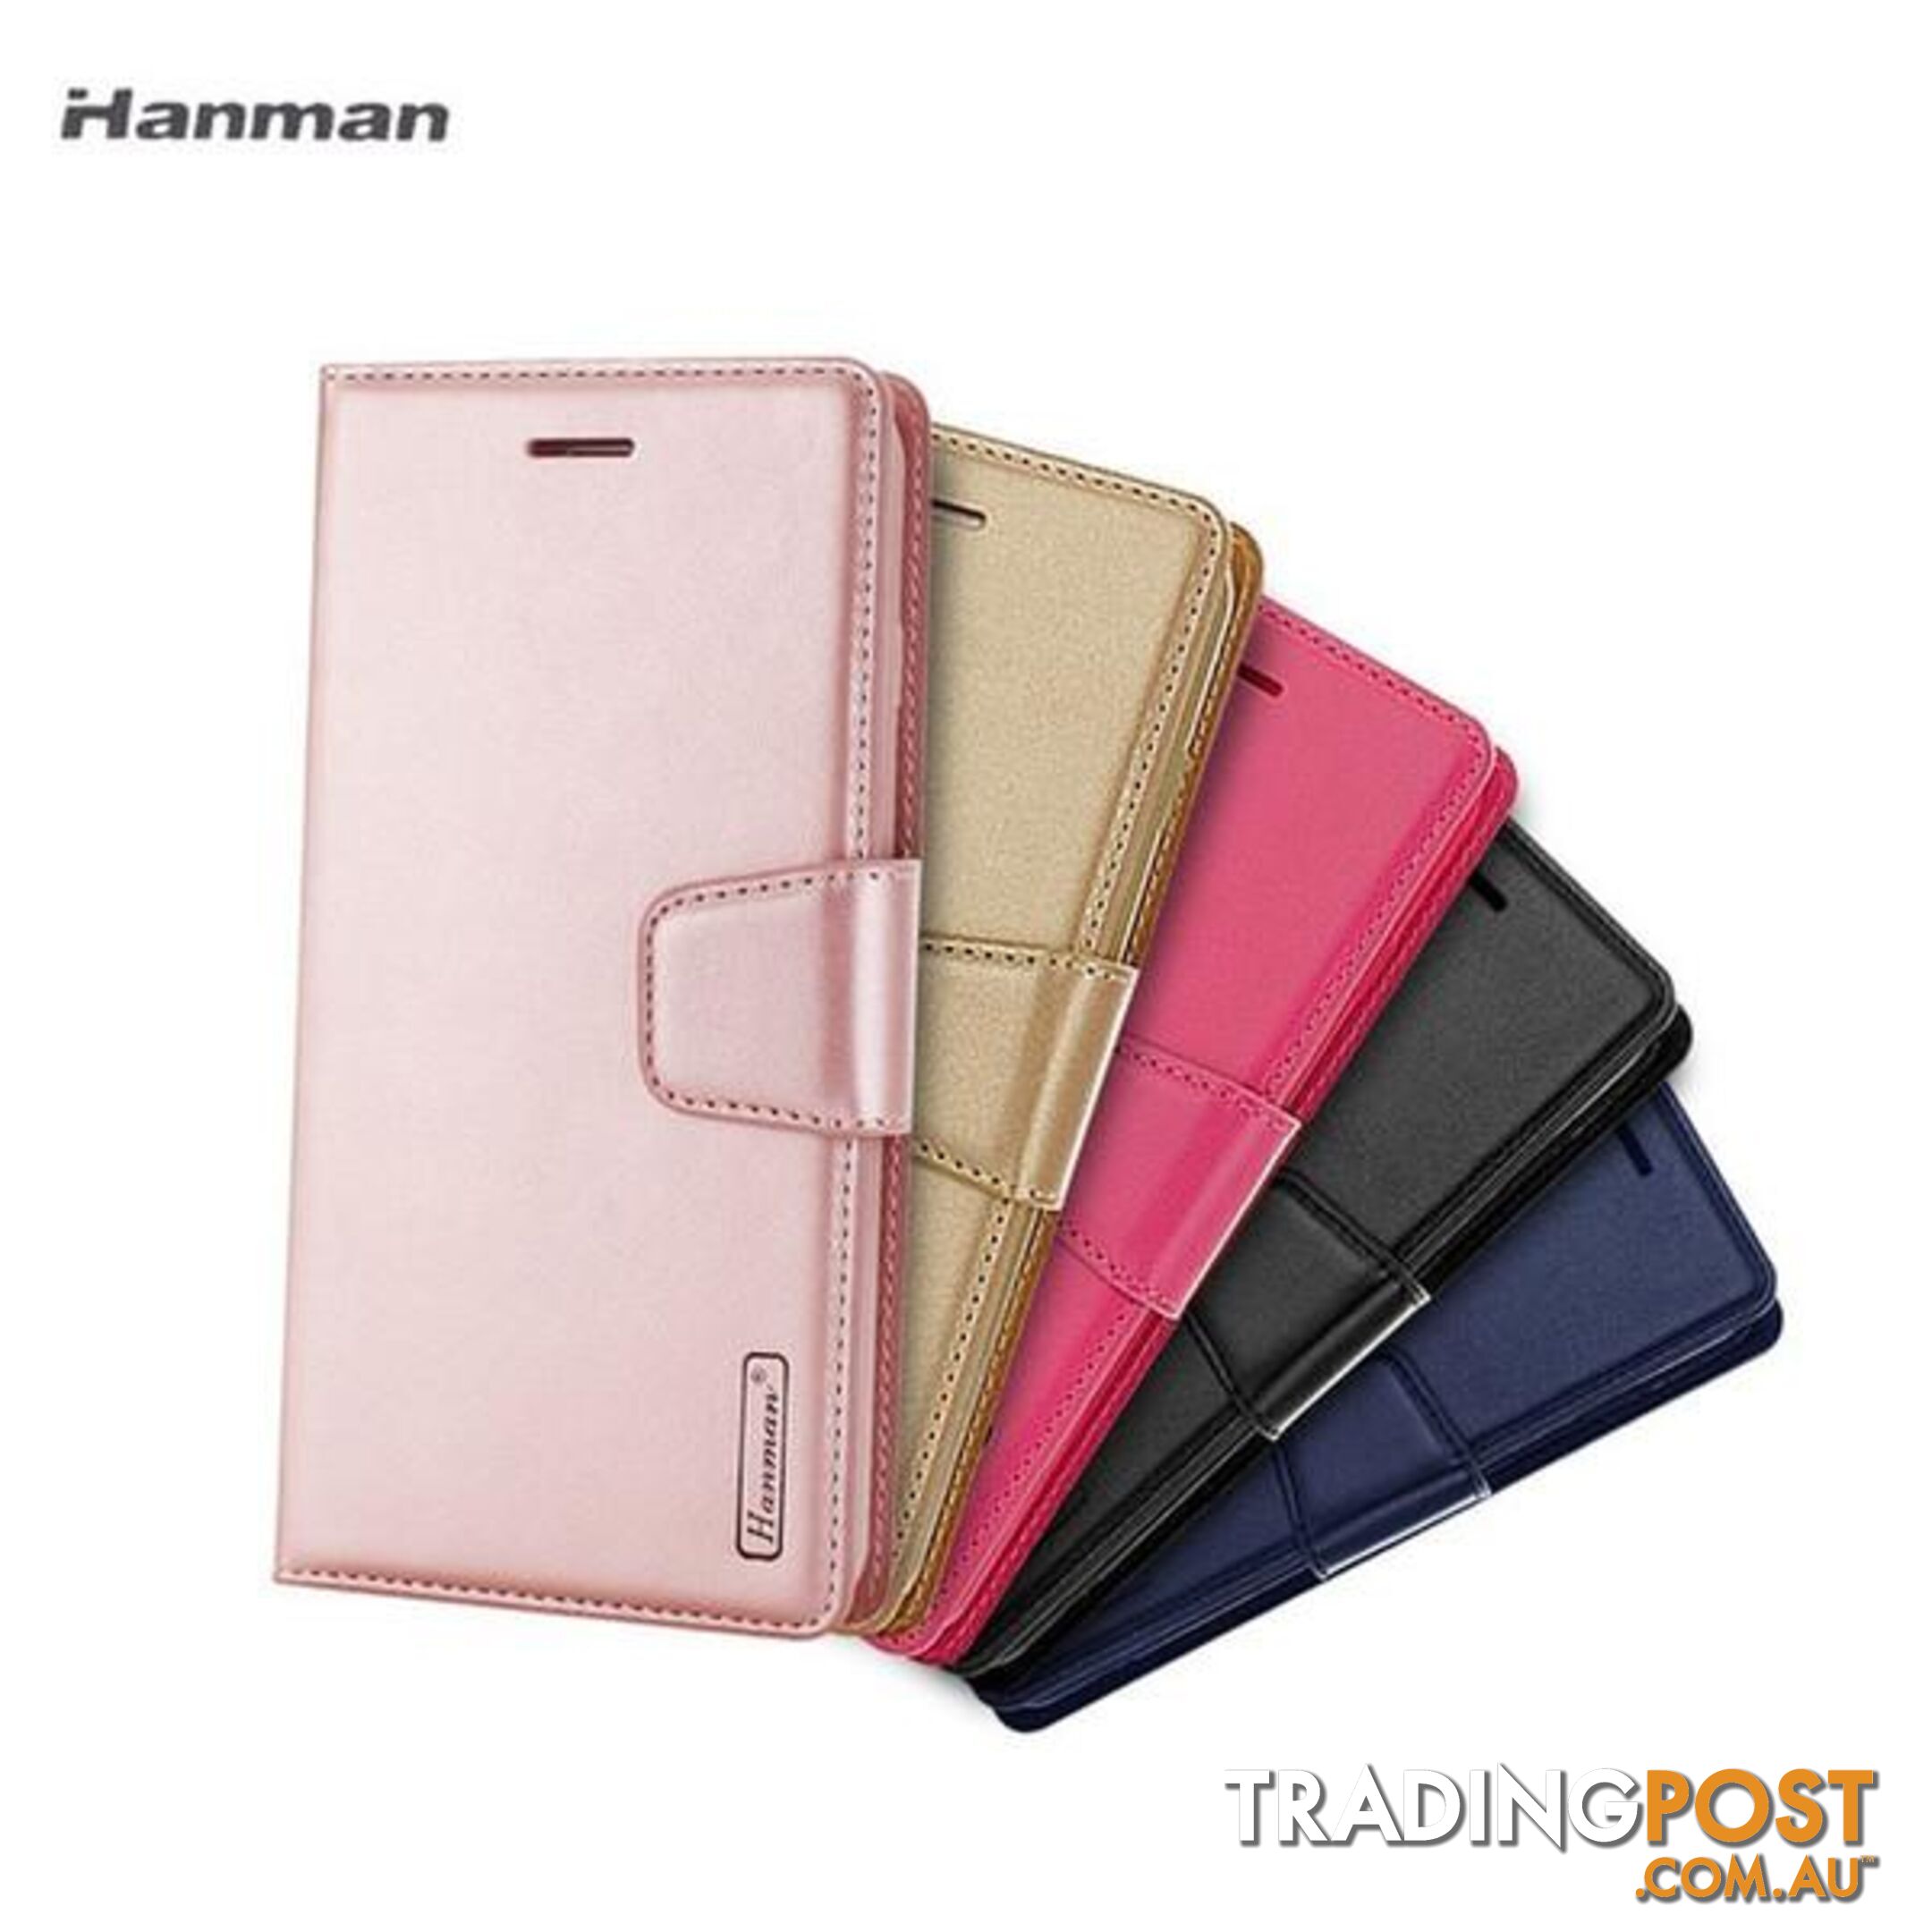 S10 Hanman Wallet Style Case - 100995 - Cases